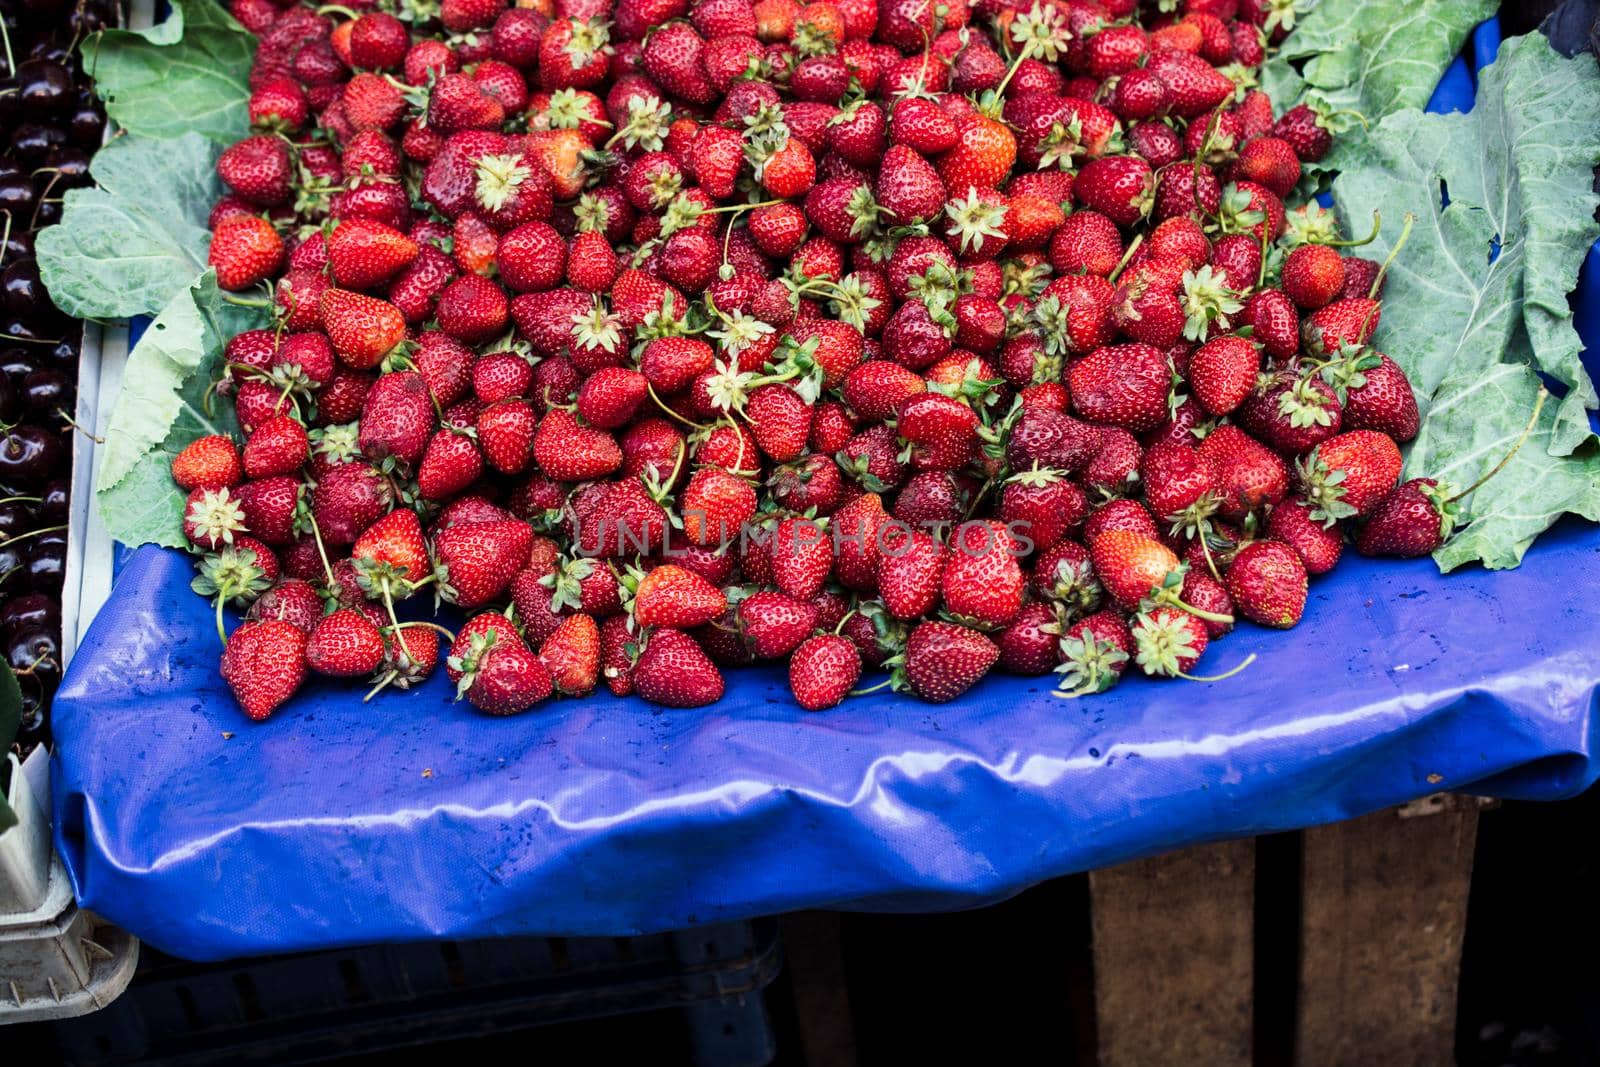 Strawberries on sale in a Turkish street bazaar